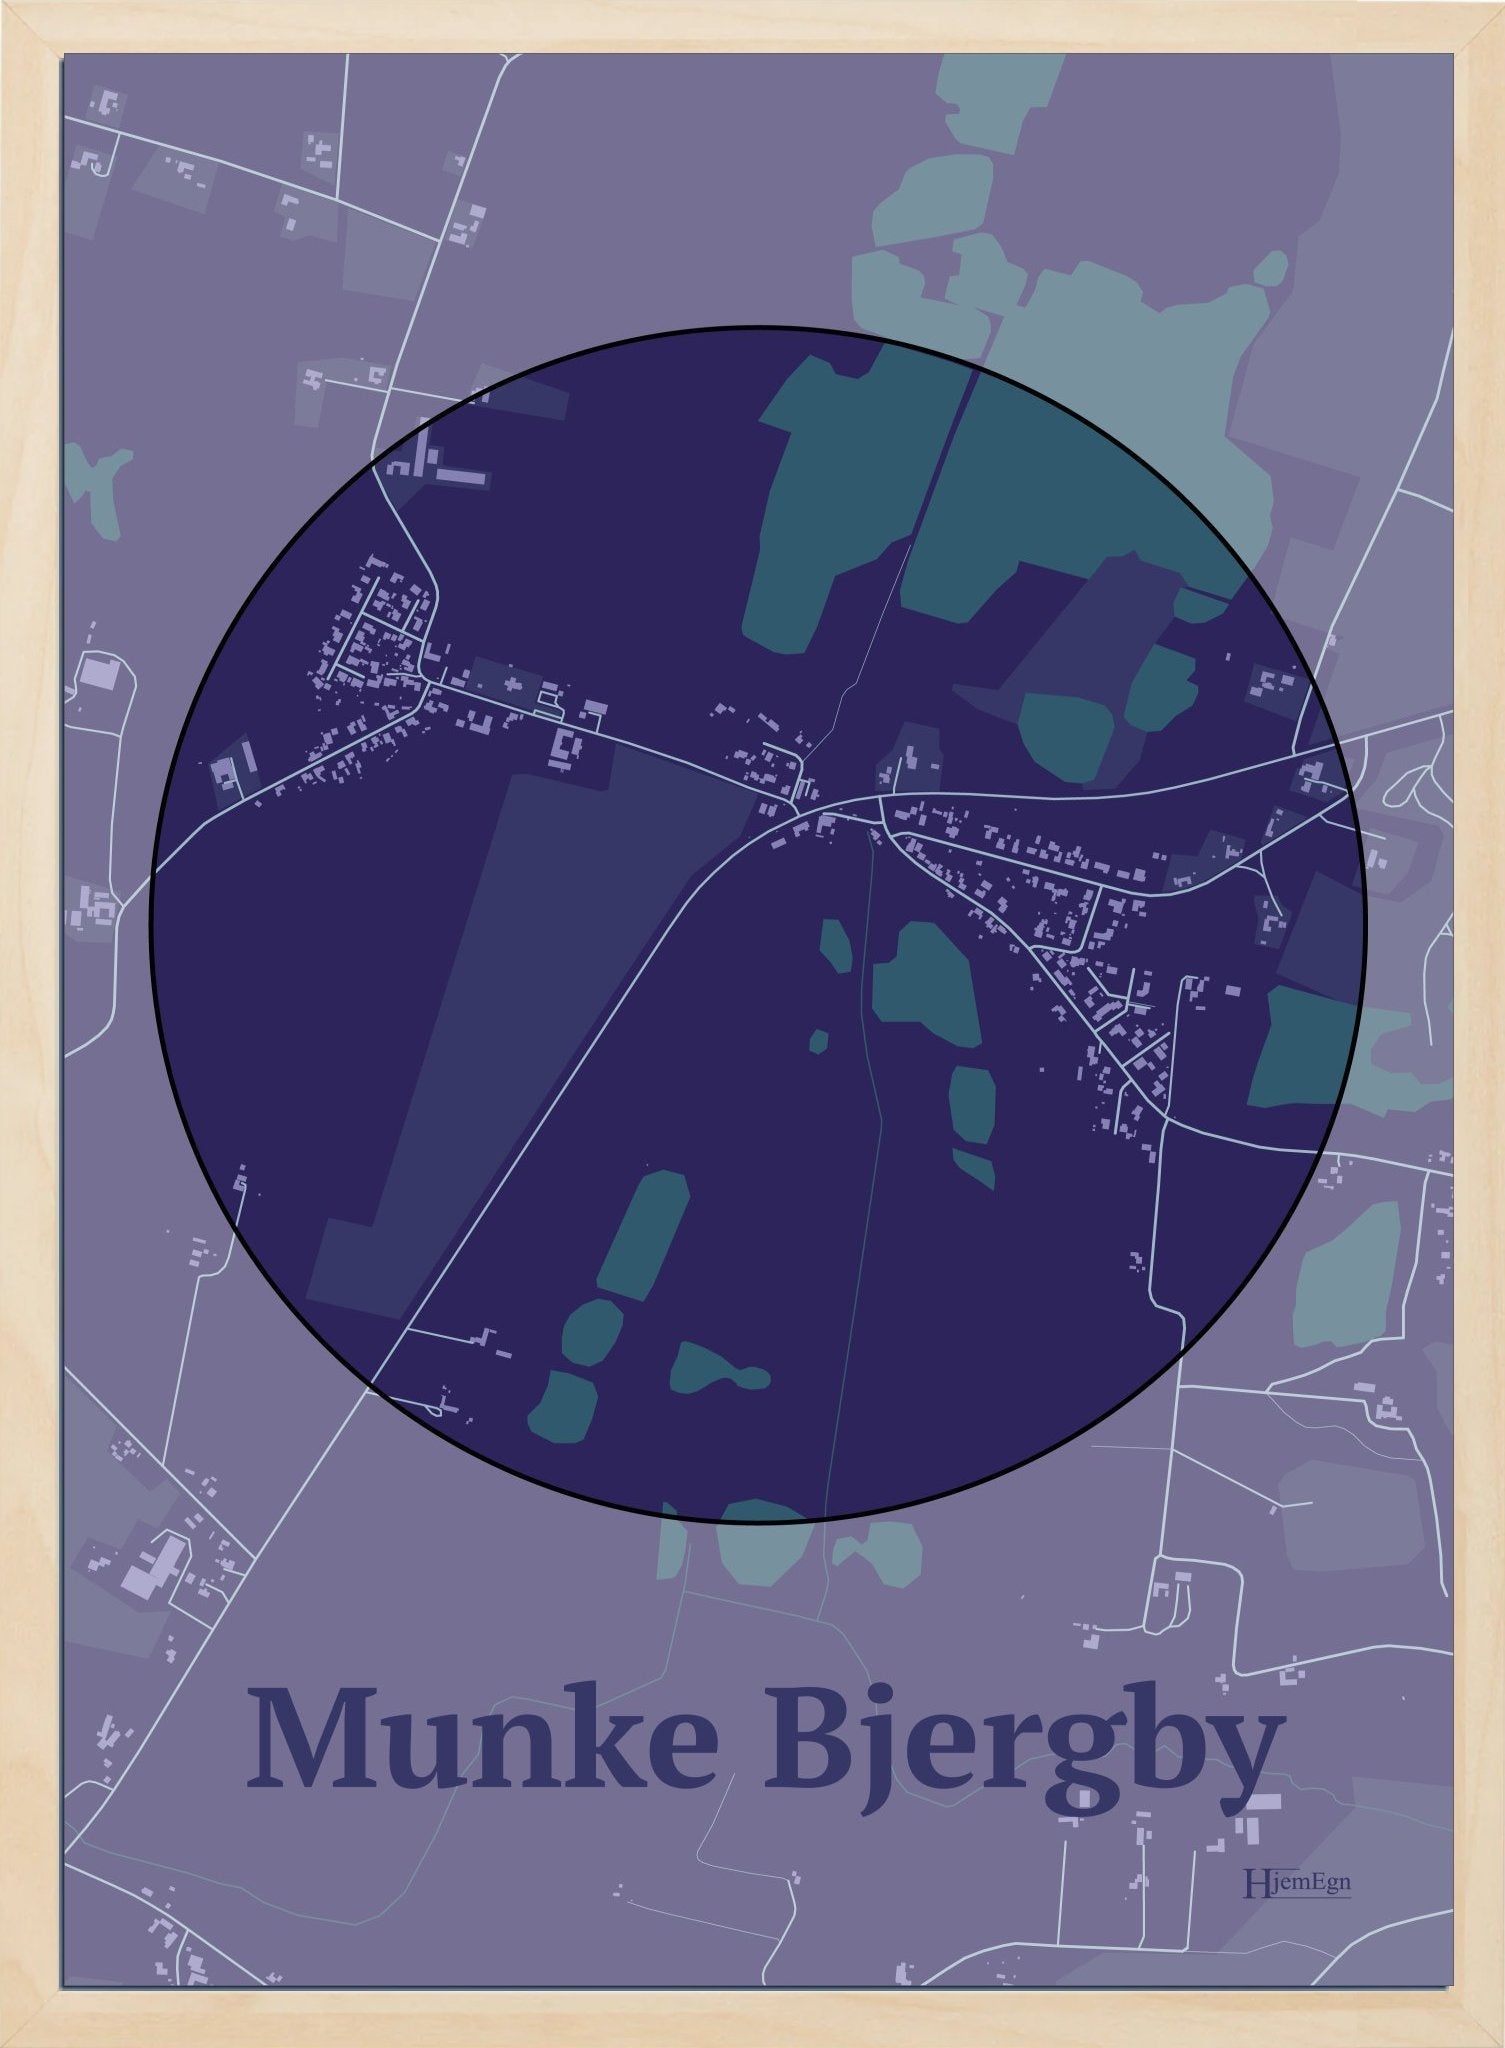 Munke Bjergby plakat i farve mørk lilla og HjemEgn.dk design centrum. Design bykort for Munke Bjergby